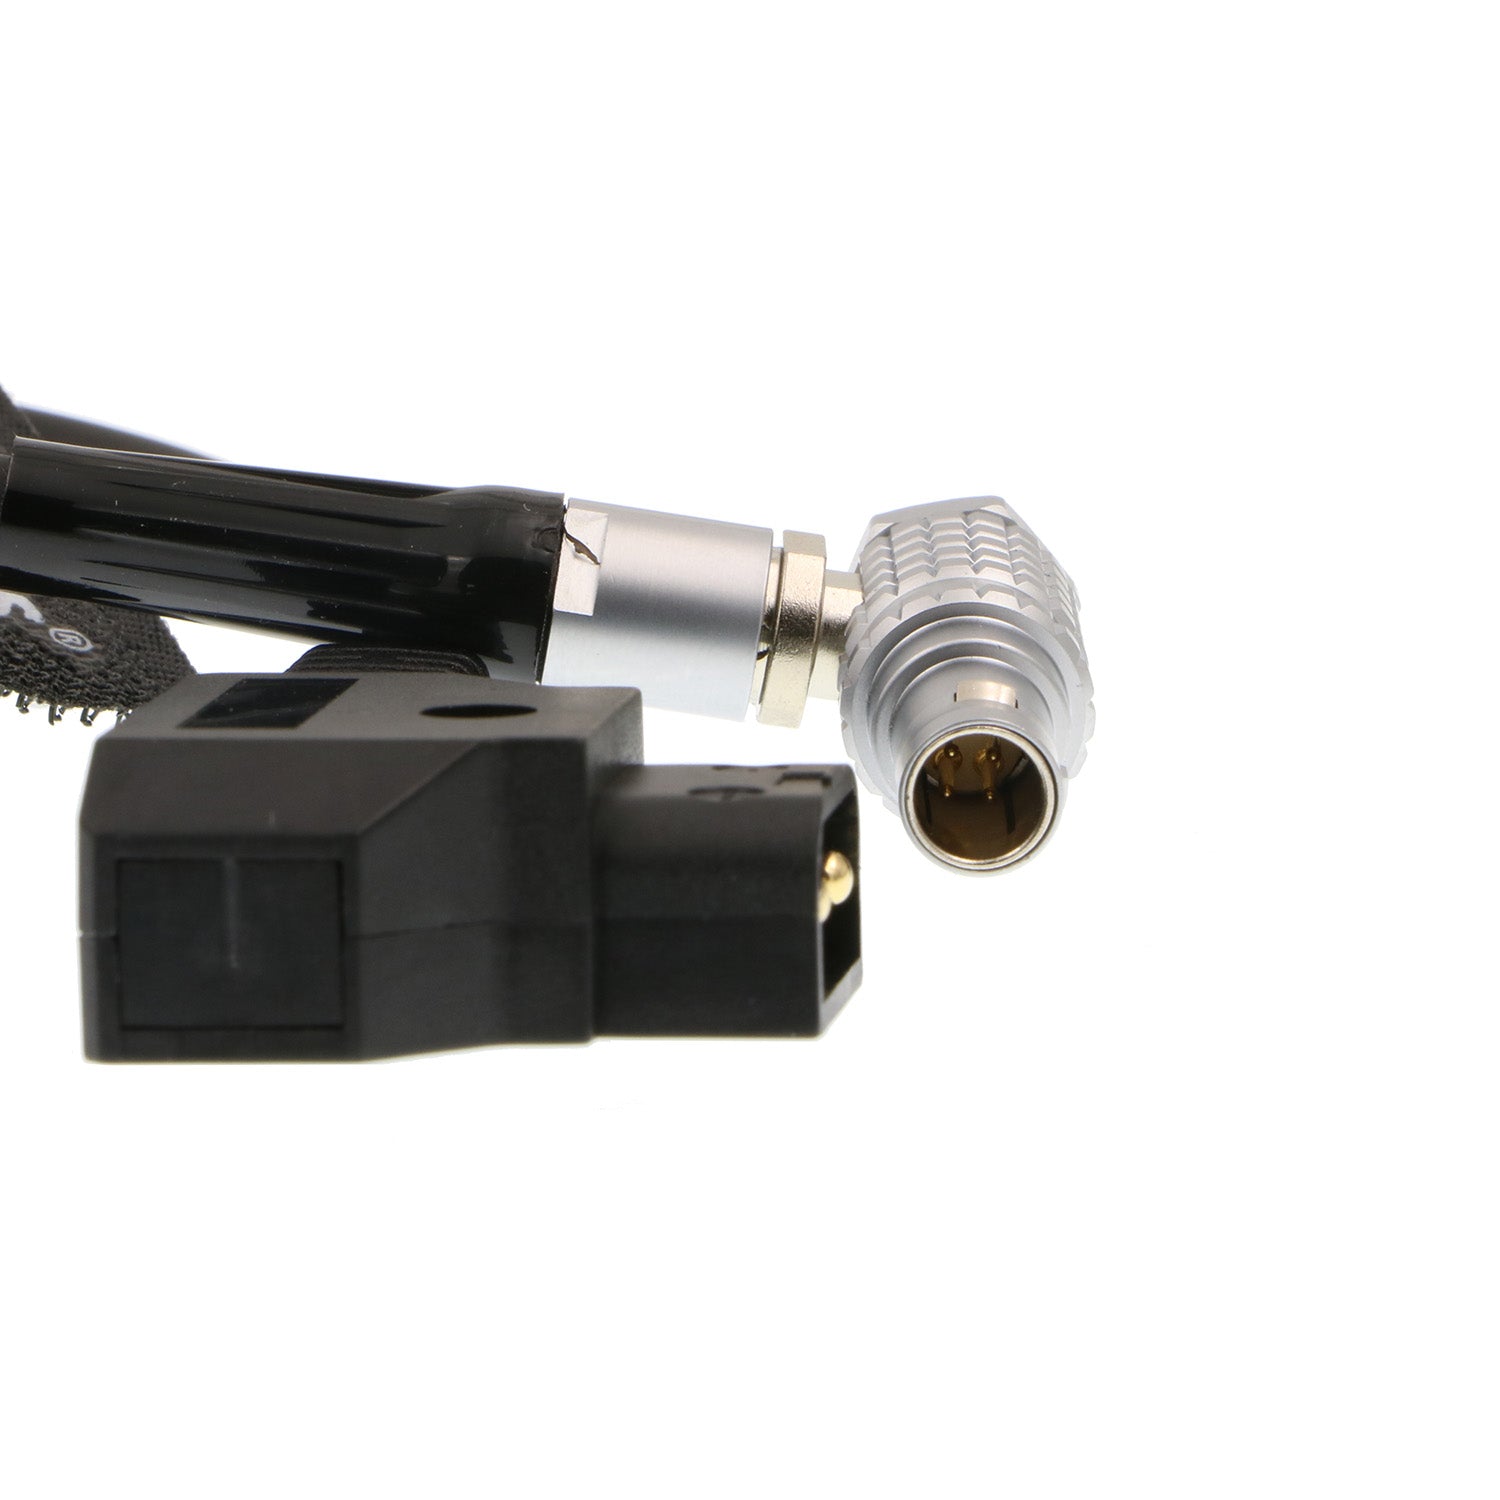 Alvin's Cables 4-poliger rechtwinkliger Stecker auf D-Tap-Stromkabel für Hollyland Cosmo 400 Wireless Video Transmission System